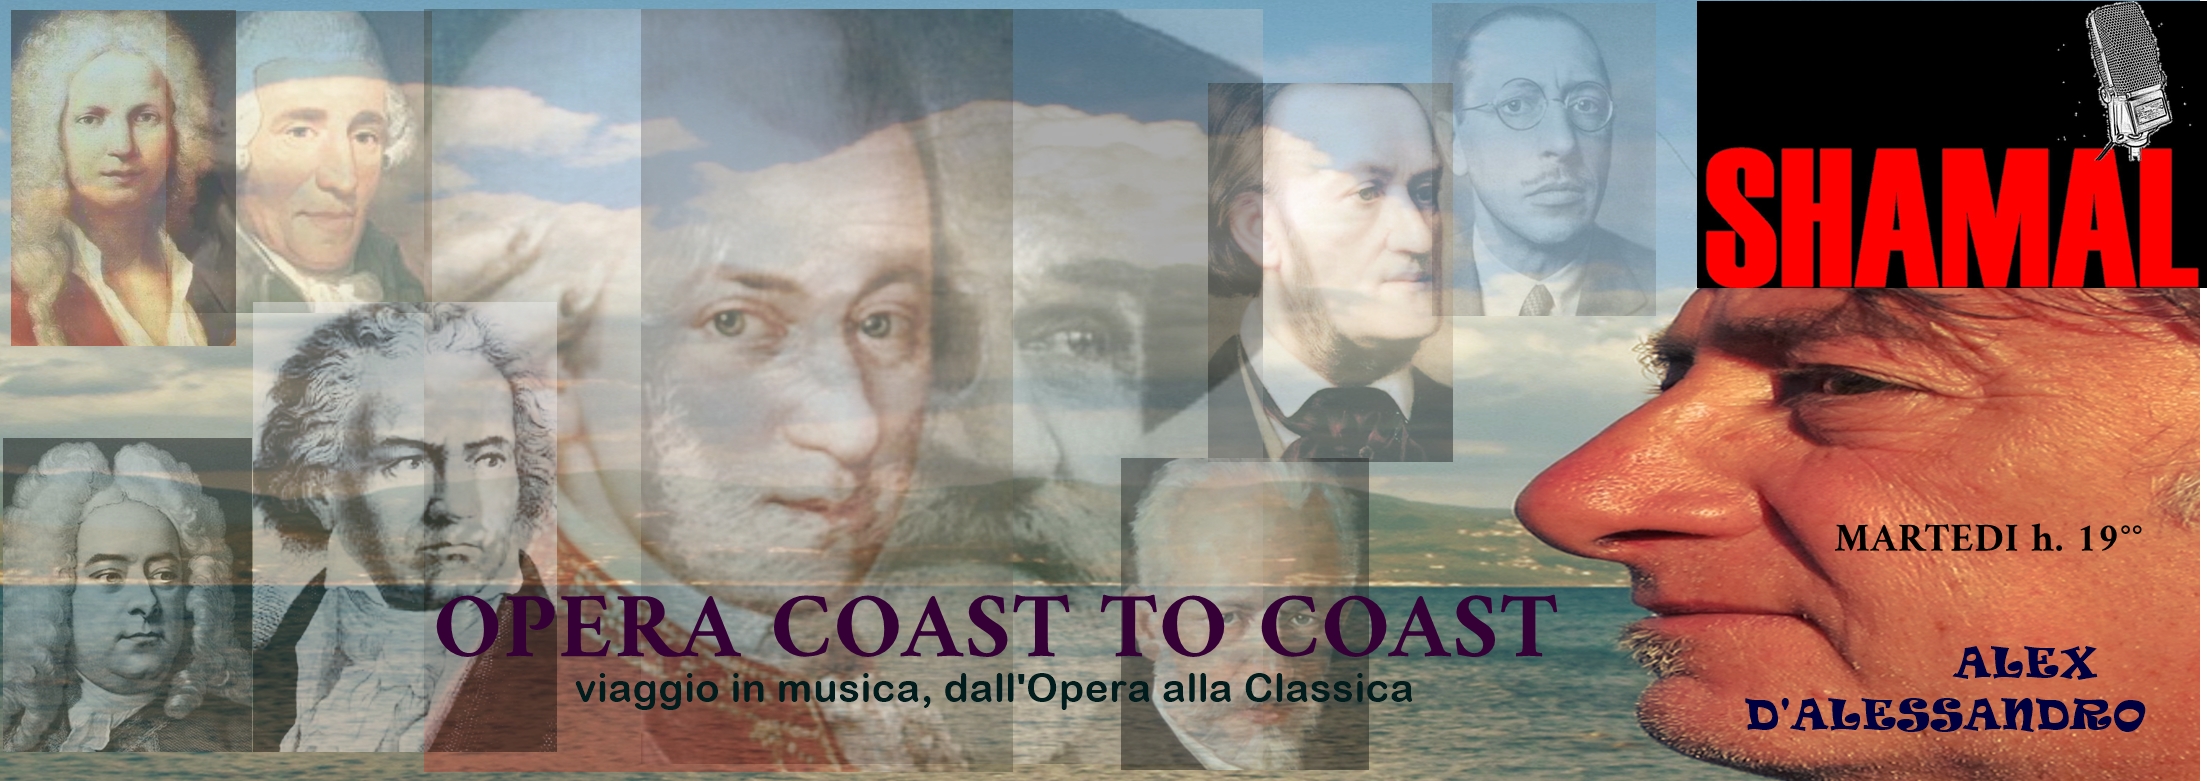 Opera Coast To Coast p64